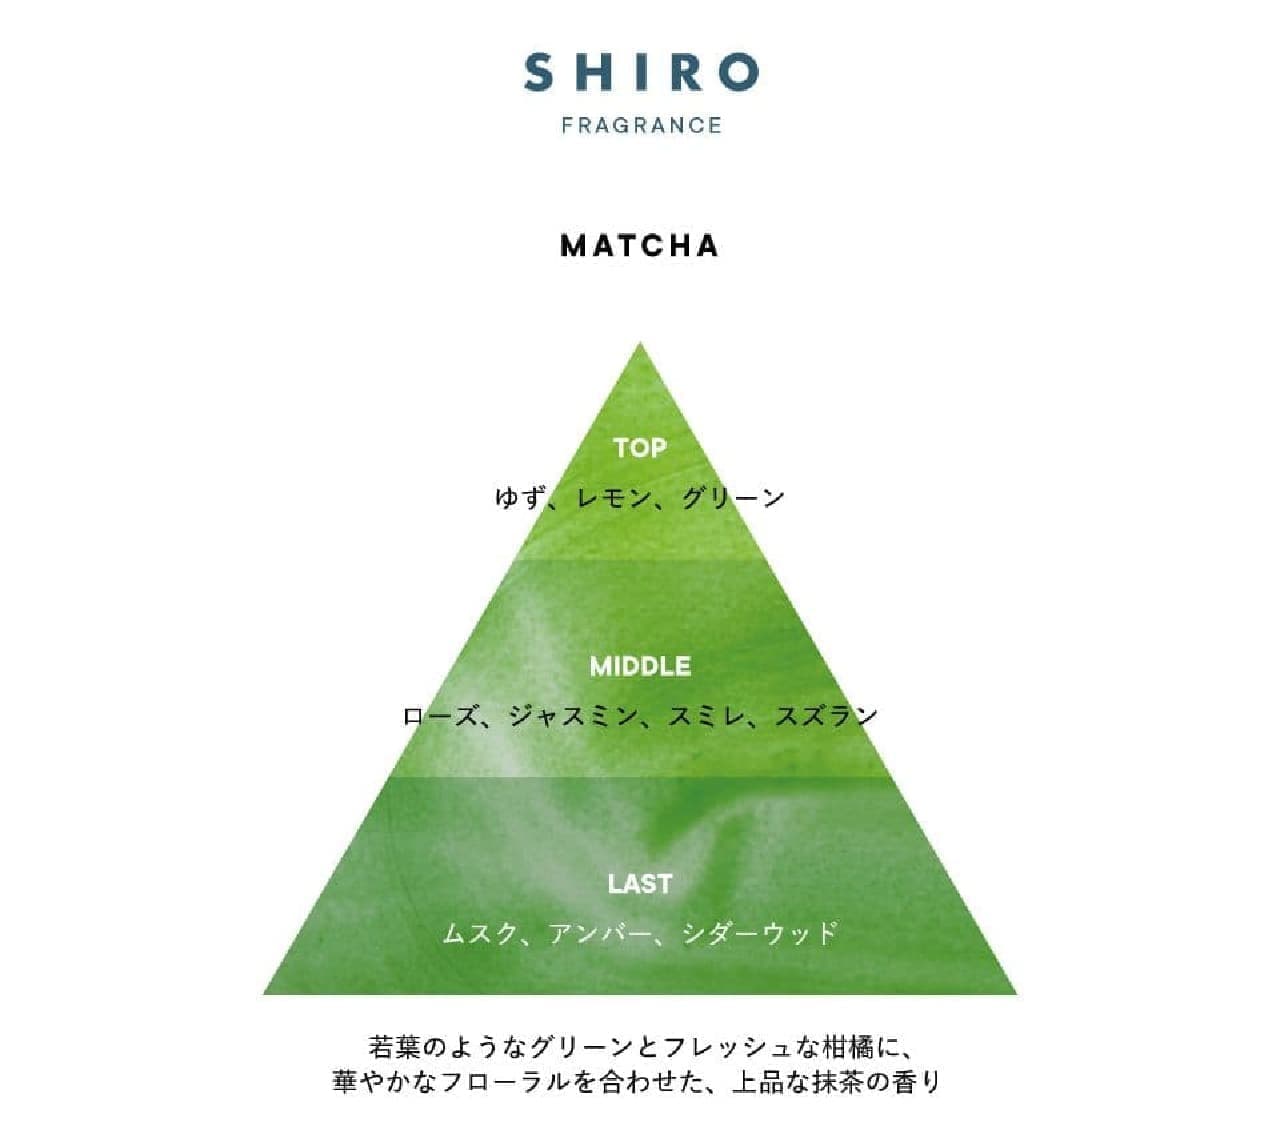 SHIRO 限定フレグランス“抹茶”シリーズ